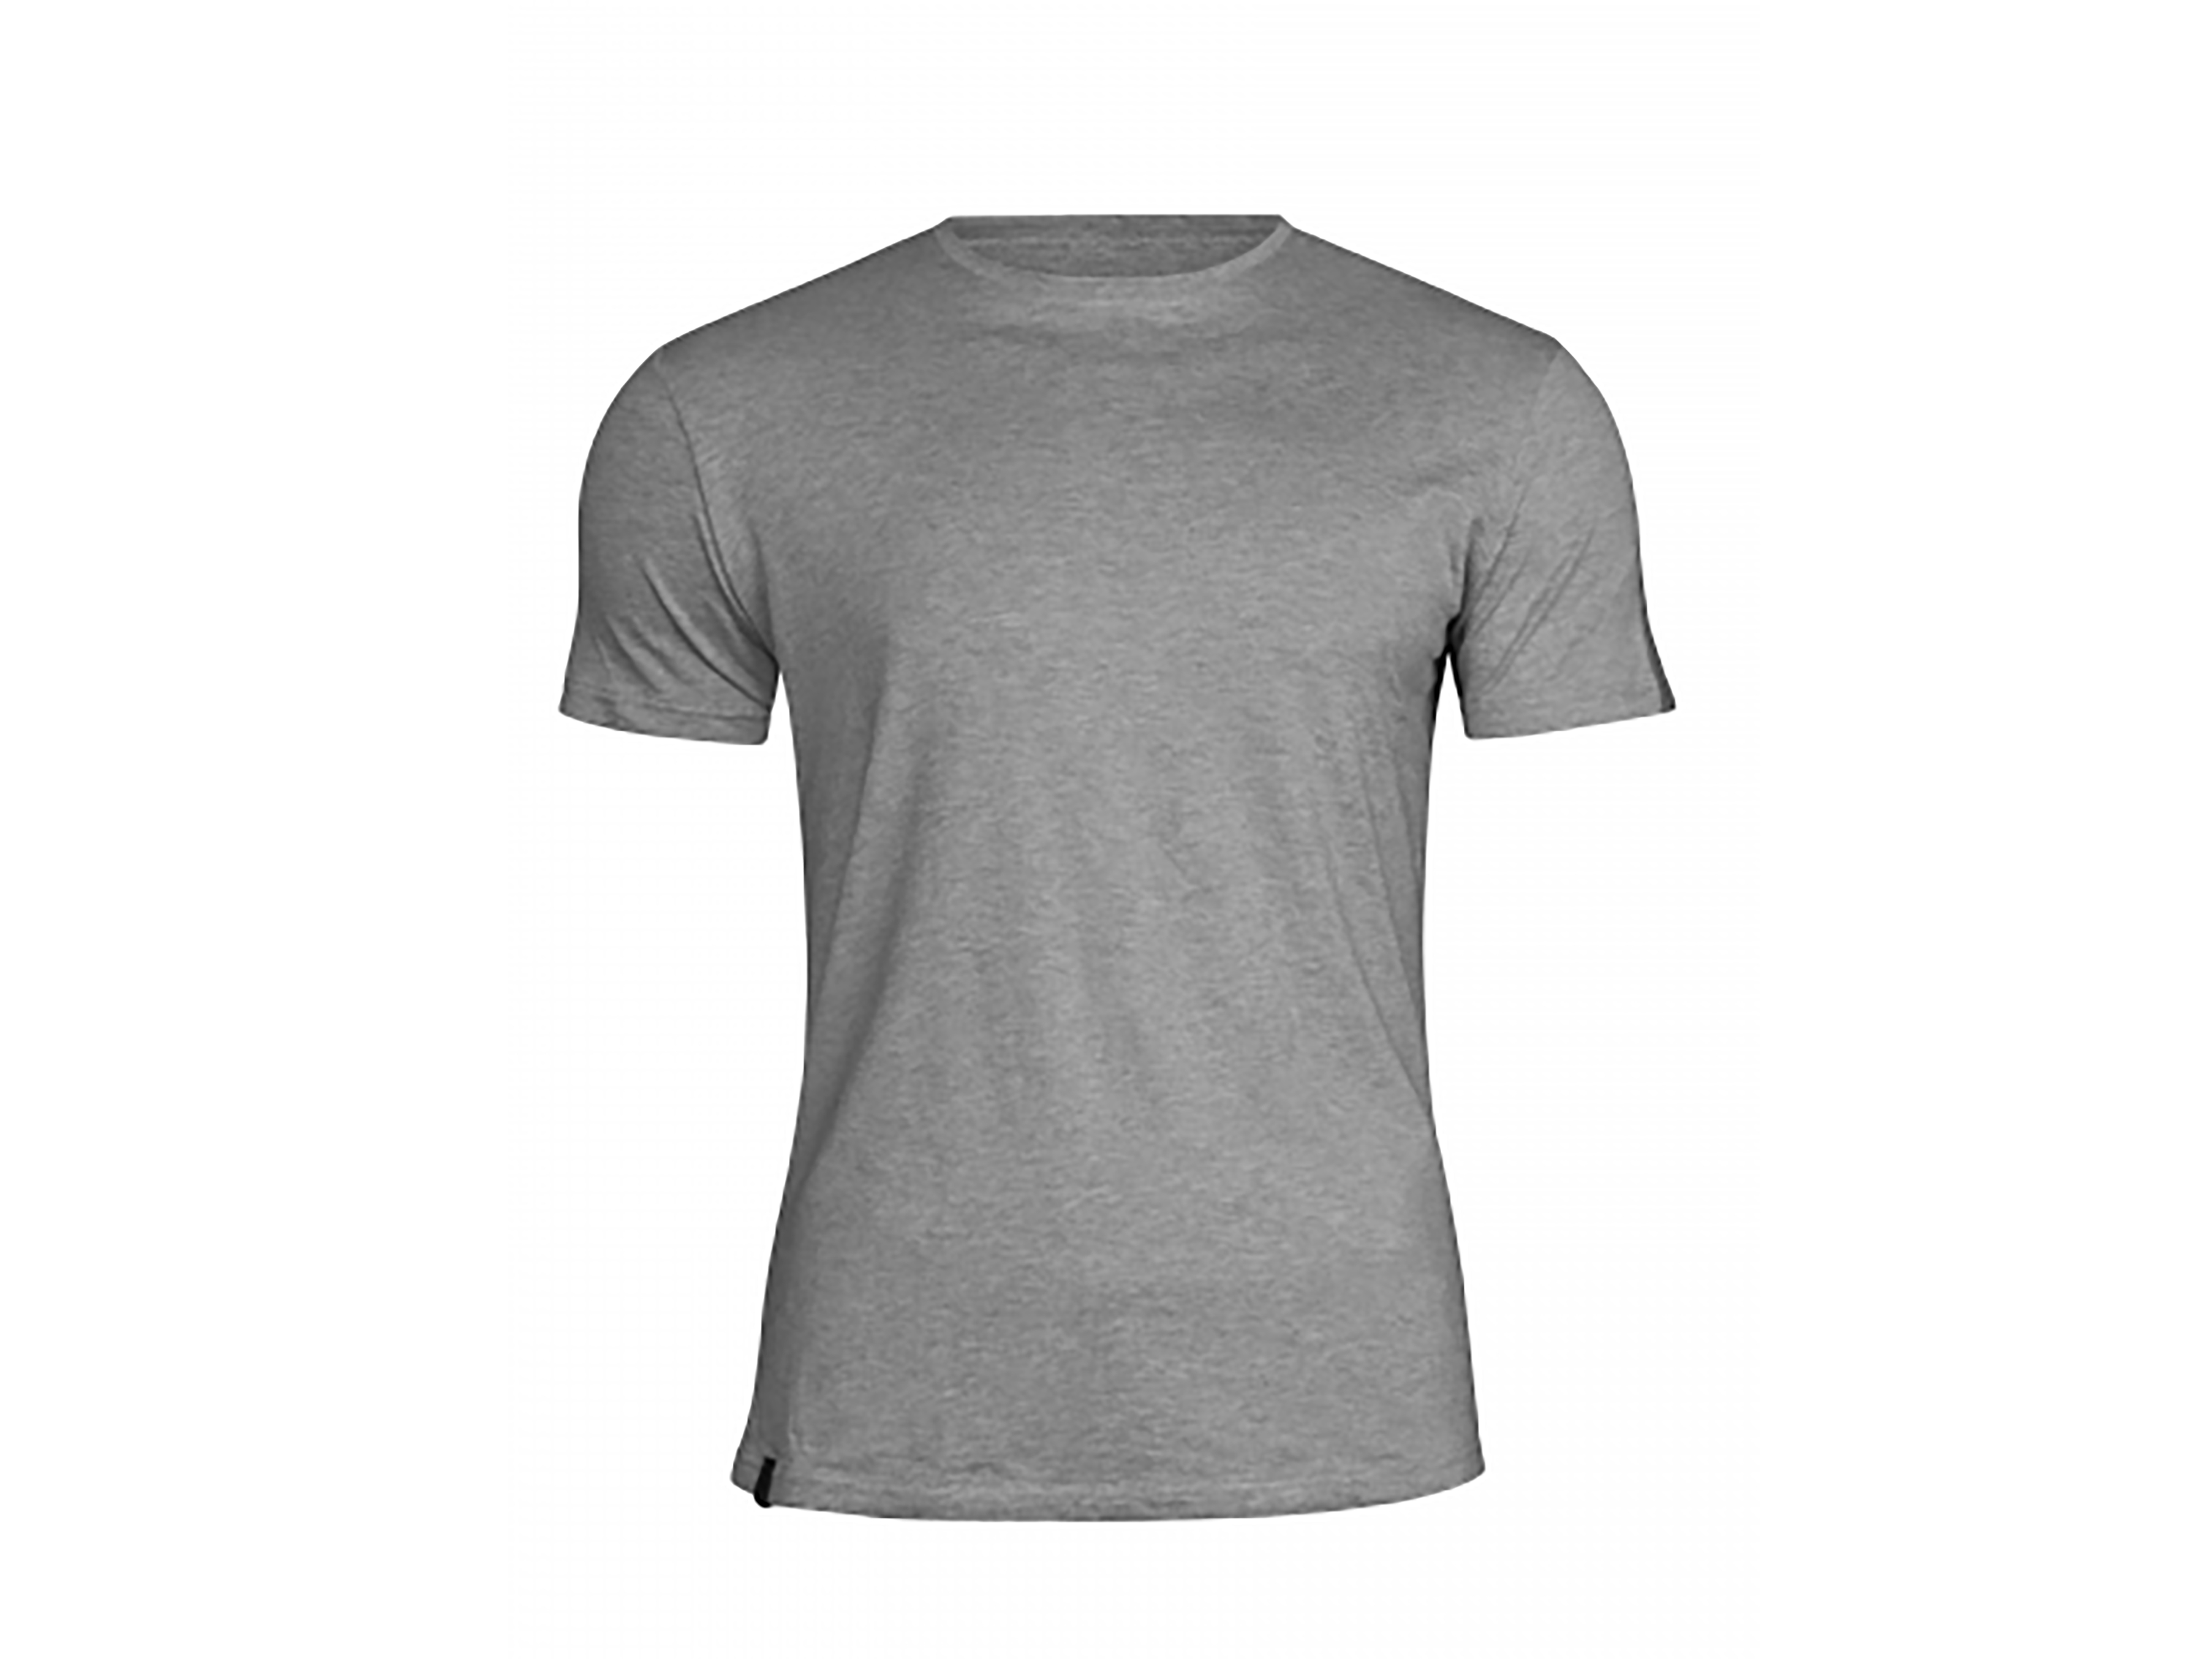 Lavrans Wear Round Neck T-Shirt Grey, 1 stk.